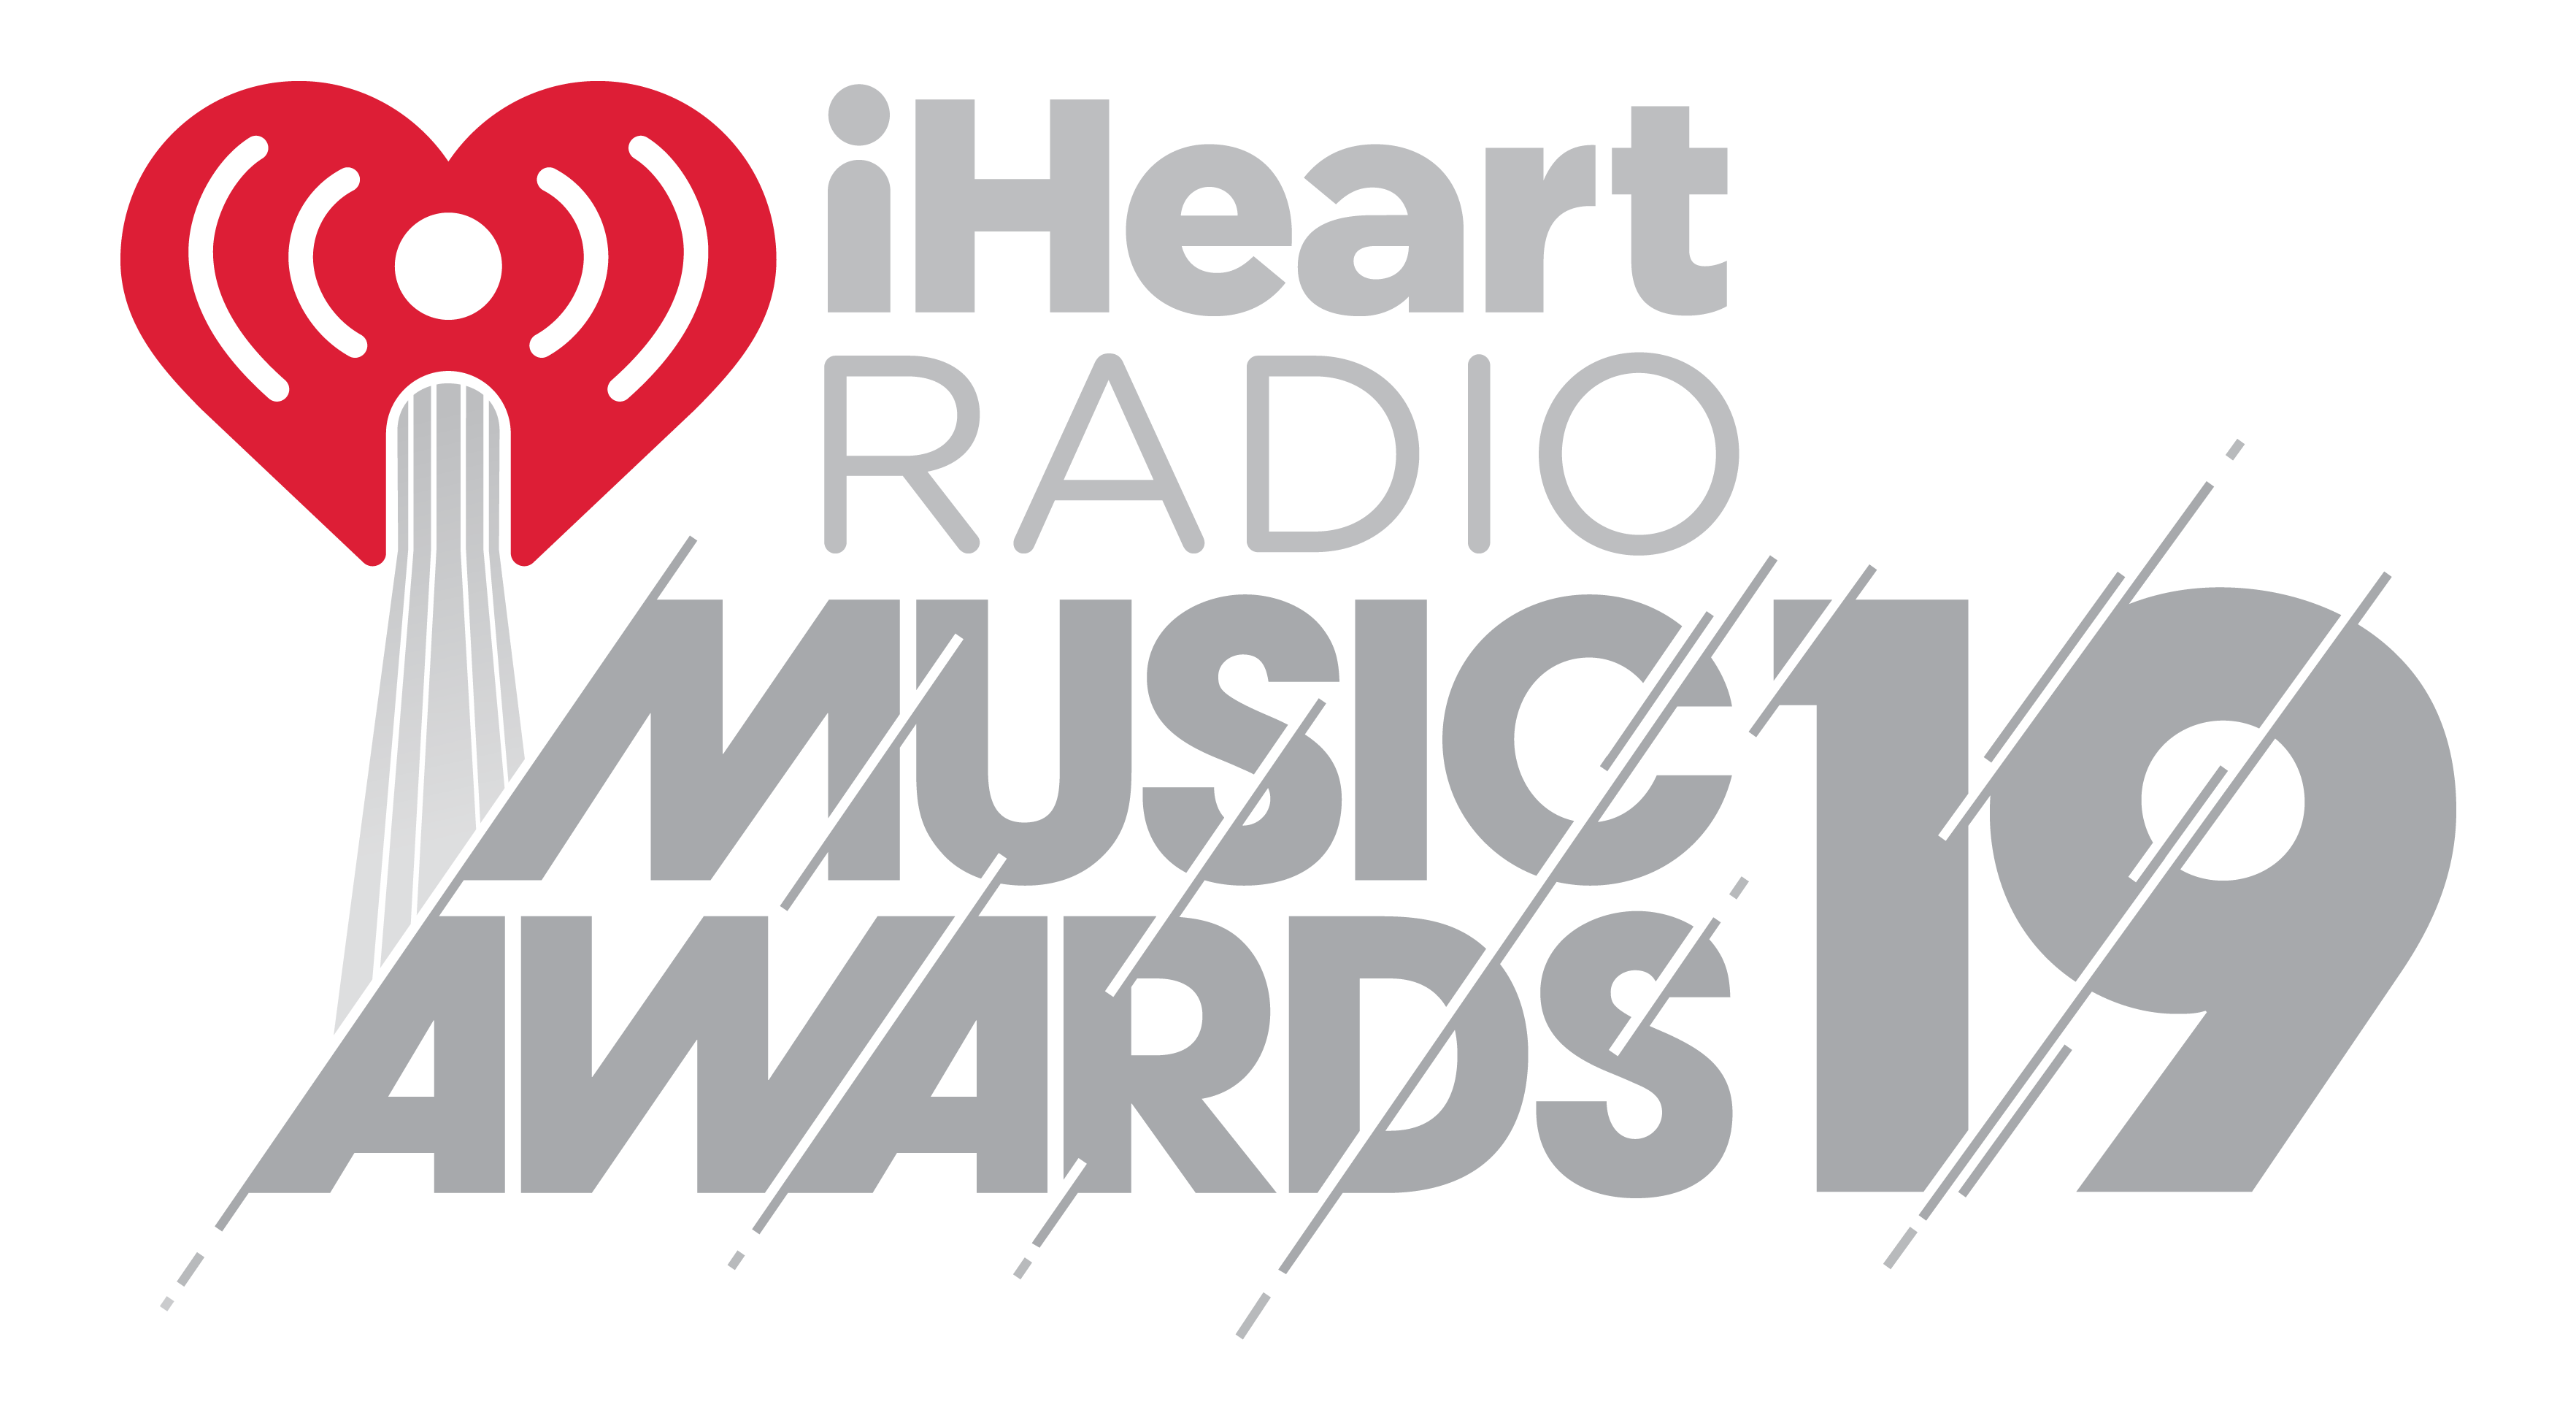 I Heart Radio App Logo - Our Events